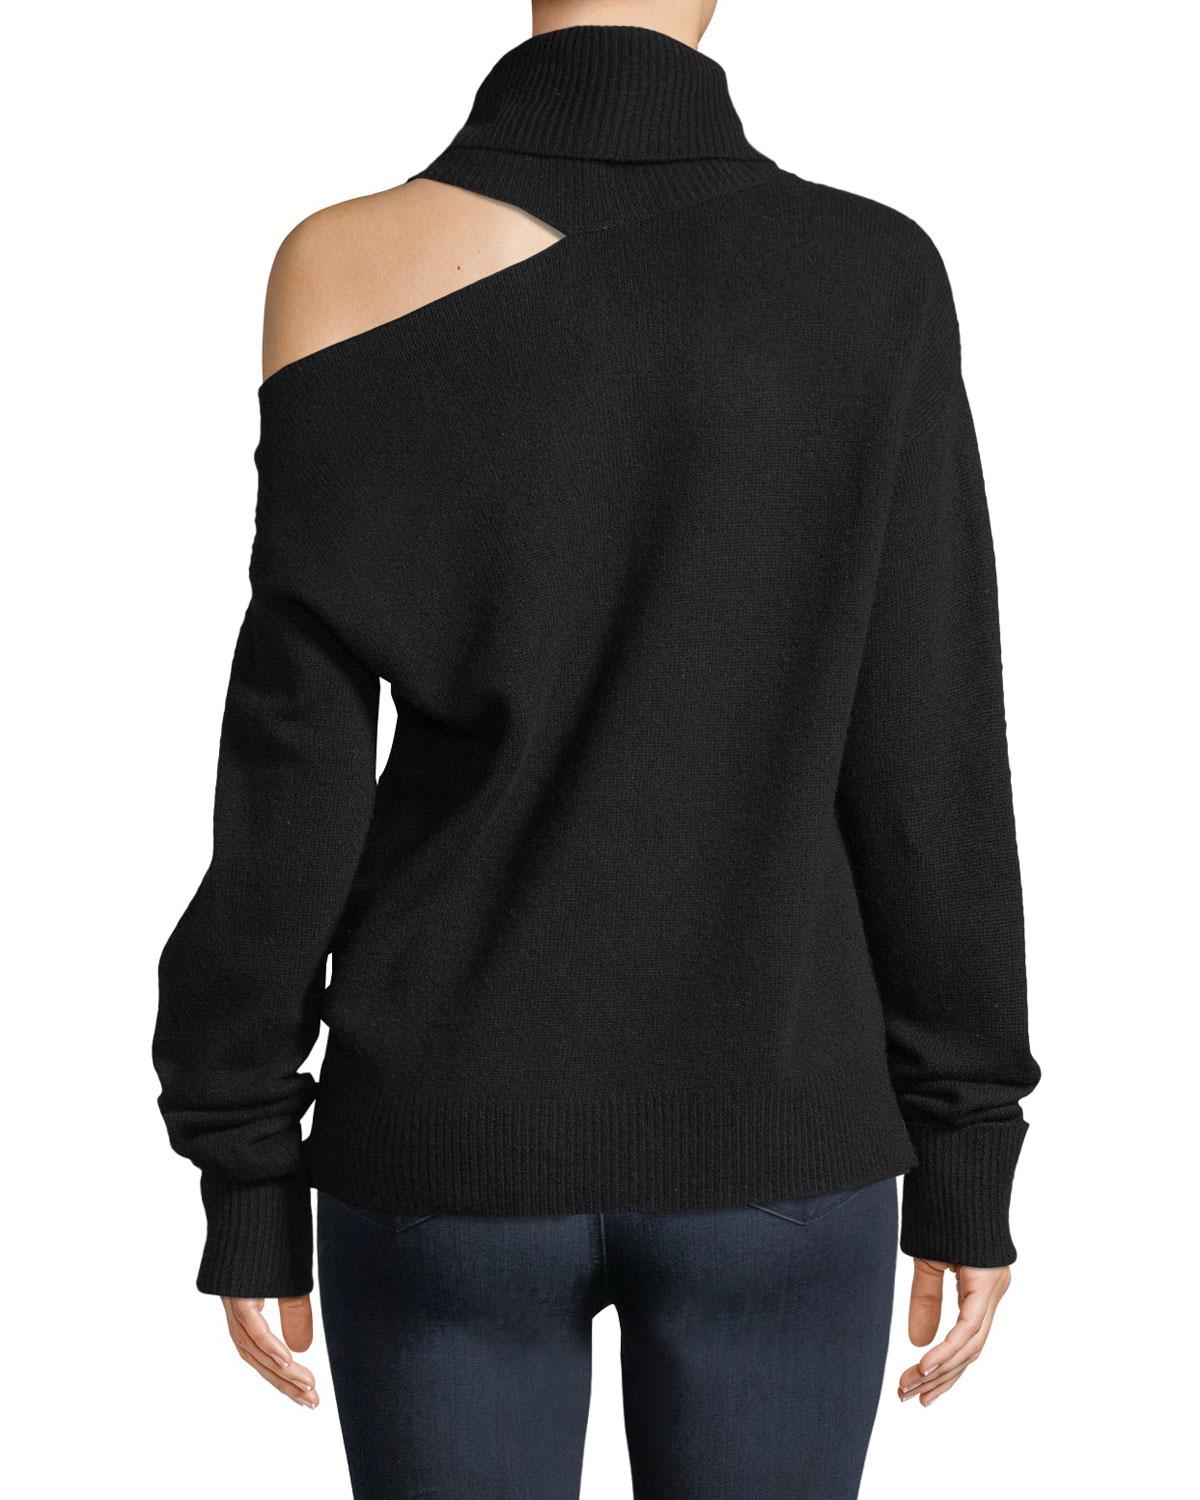 PAIGE Raundi Cold-shoulder Turtleneck Wool-blend Sweater in Black - Lyst